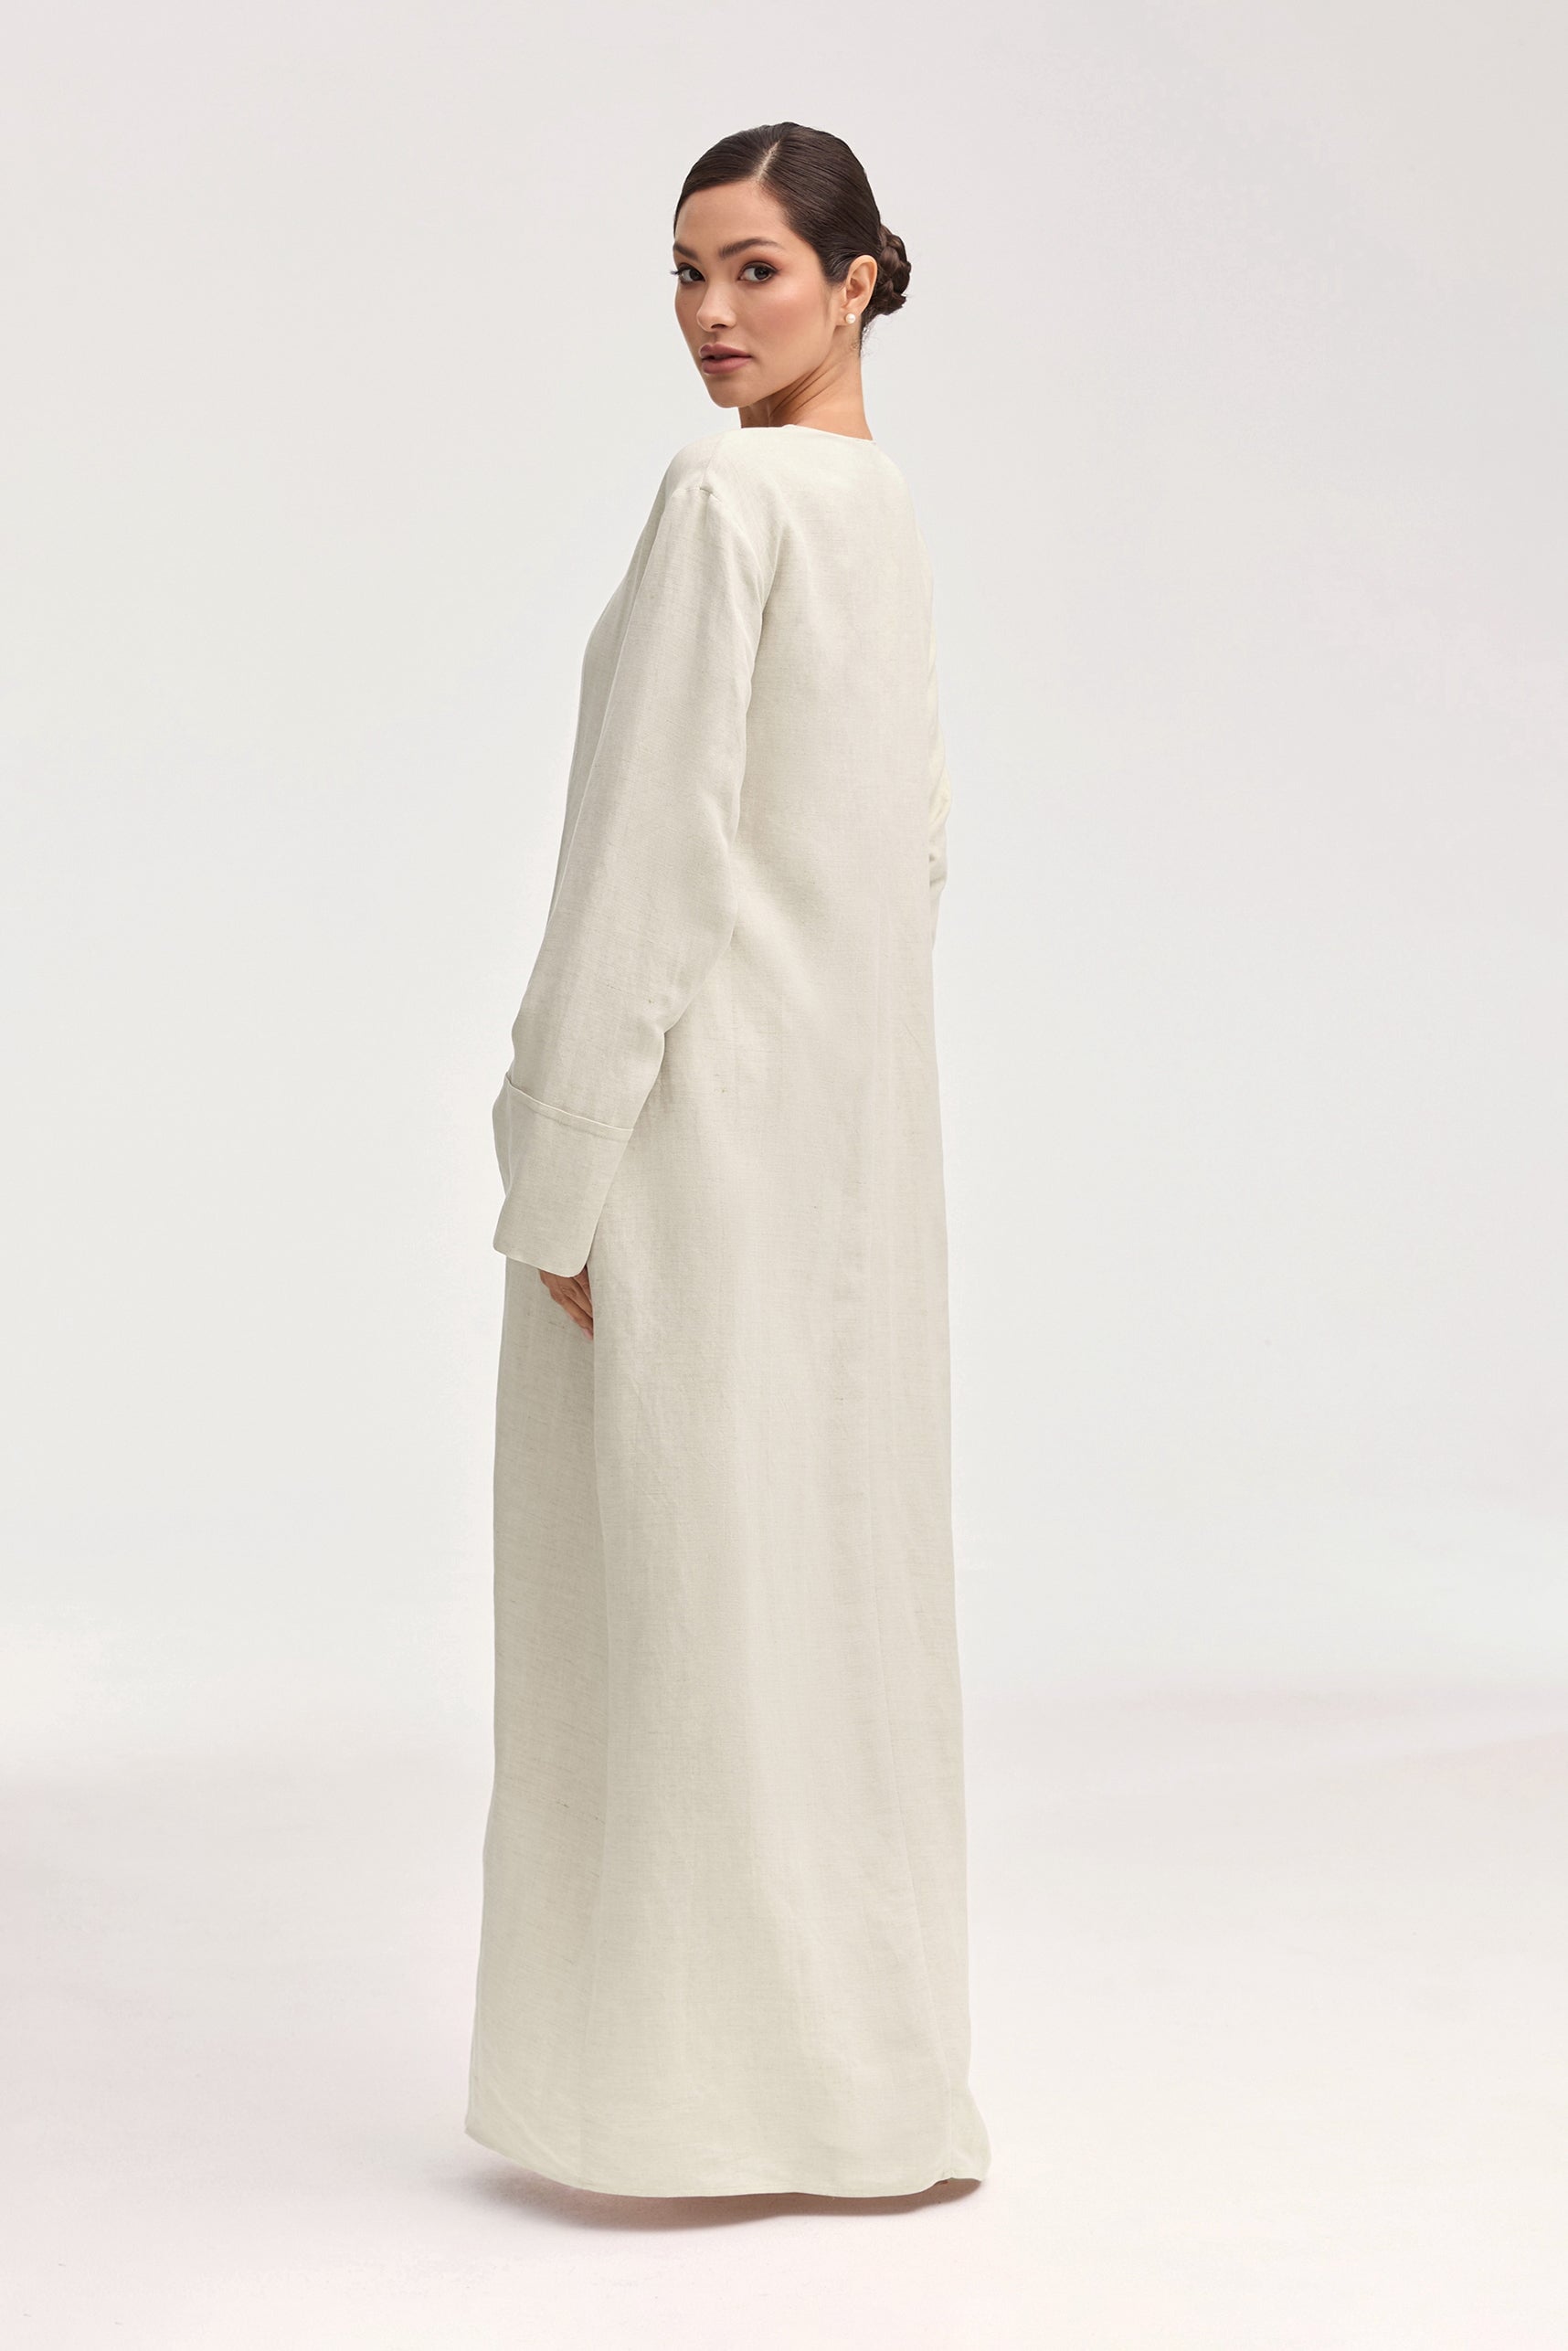 Lana Linen Button Down Maxi Dress - Oatmeal Clothing Veiled 